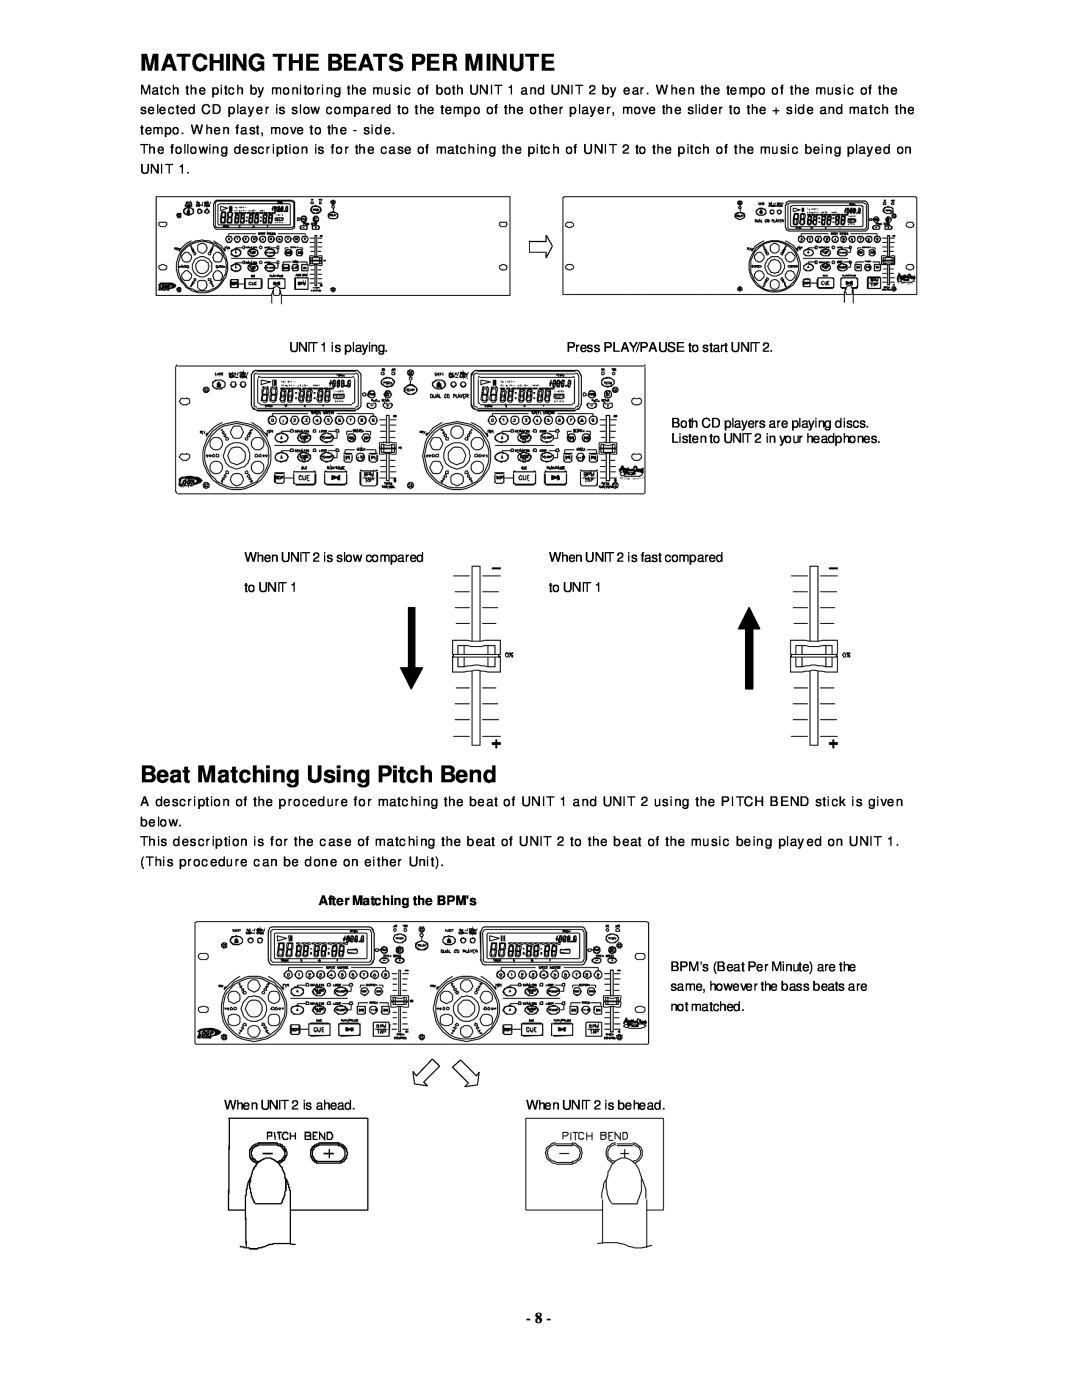 Radio Shack PDCD810 manual Matching The Beats Per Minute, Beat Matching Using Pitch Bend, After Matching the BPMs 